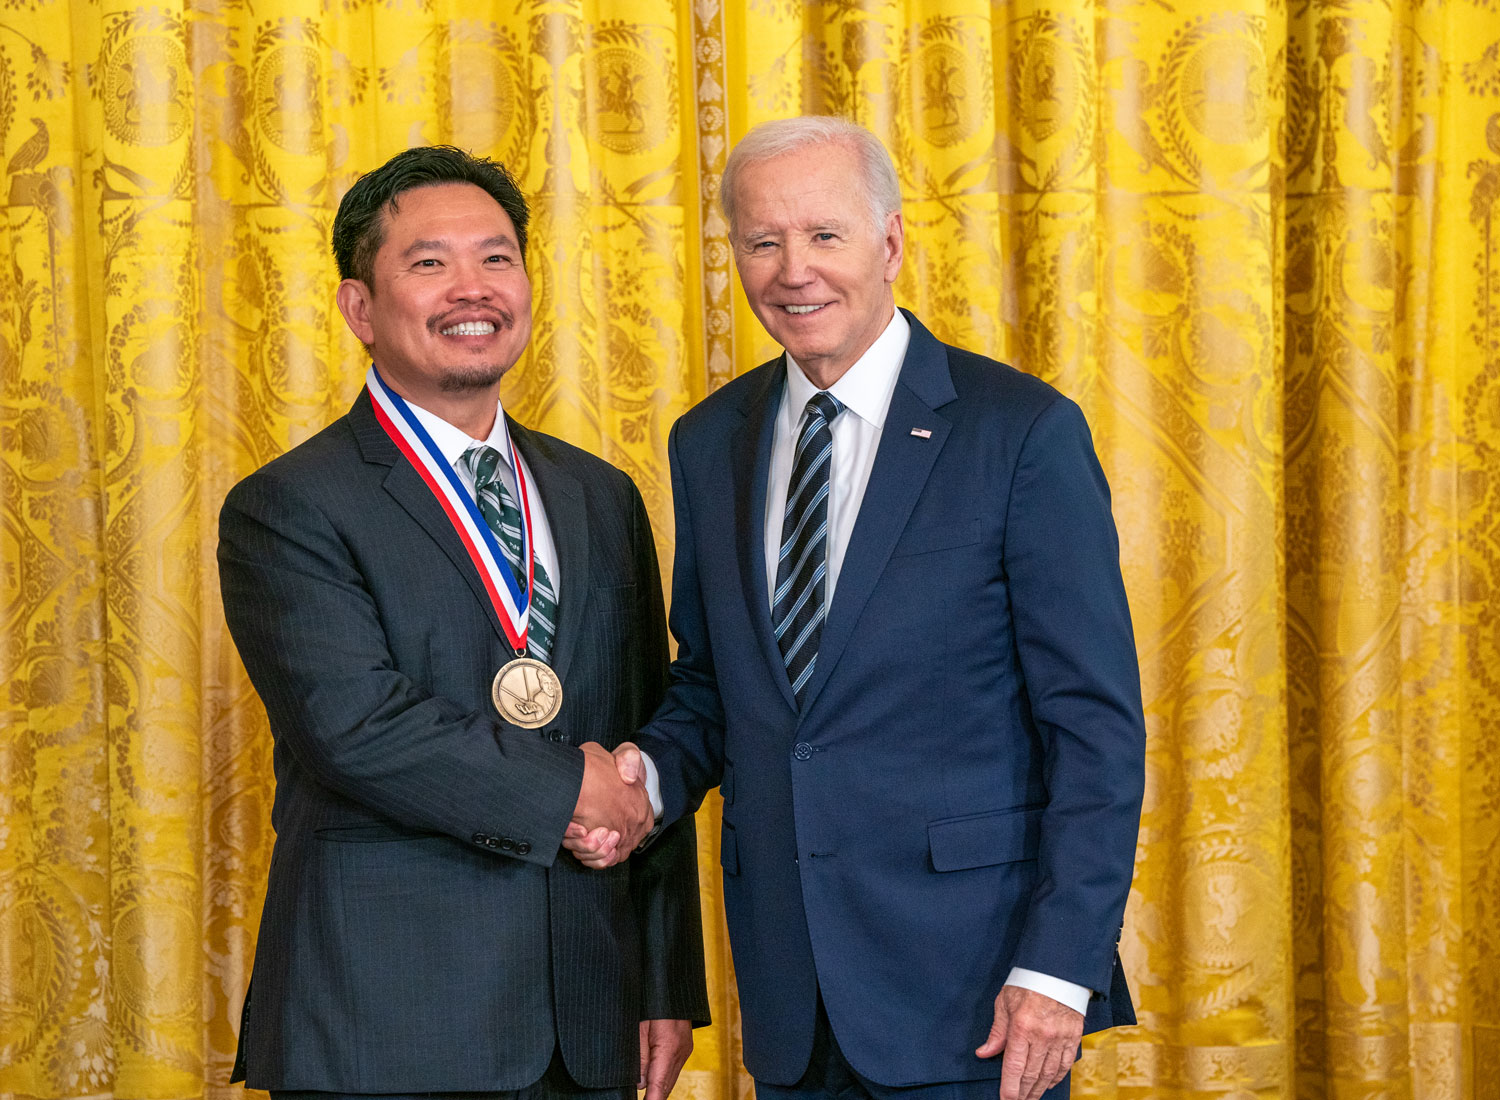 David Huang, wearing a gold medal, shakes hands with President Joe Biden.